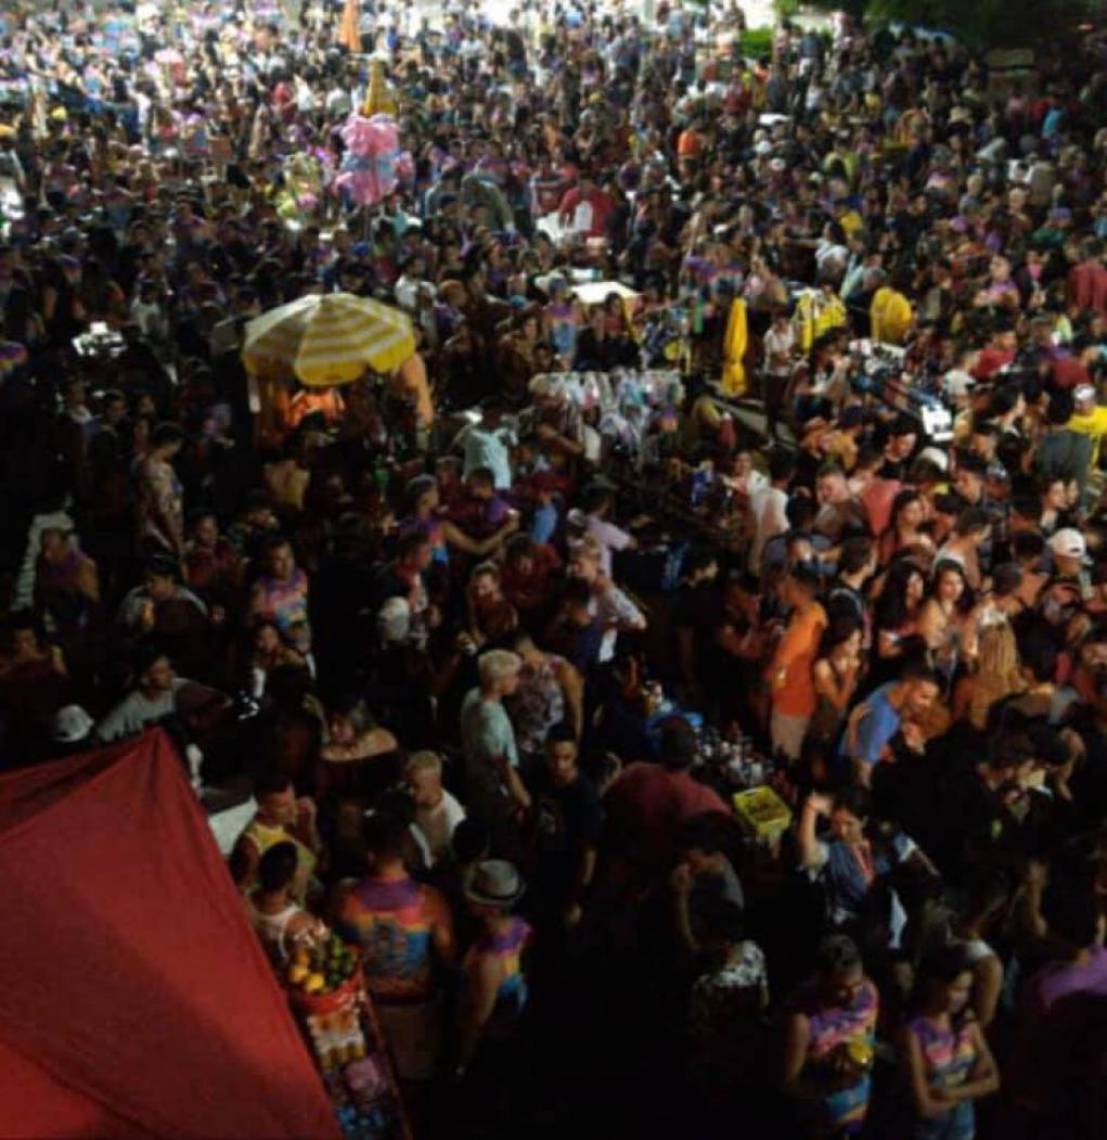 Prefeito postou foto da festa na noite de quinta-feira (20) em Aracati (Foto: FACEBOOK DE BISMARCK MAIA)